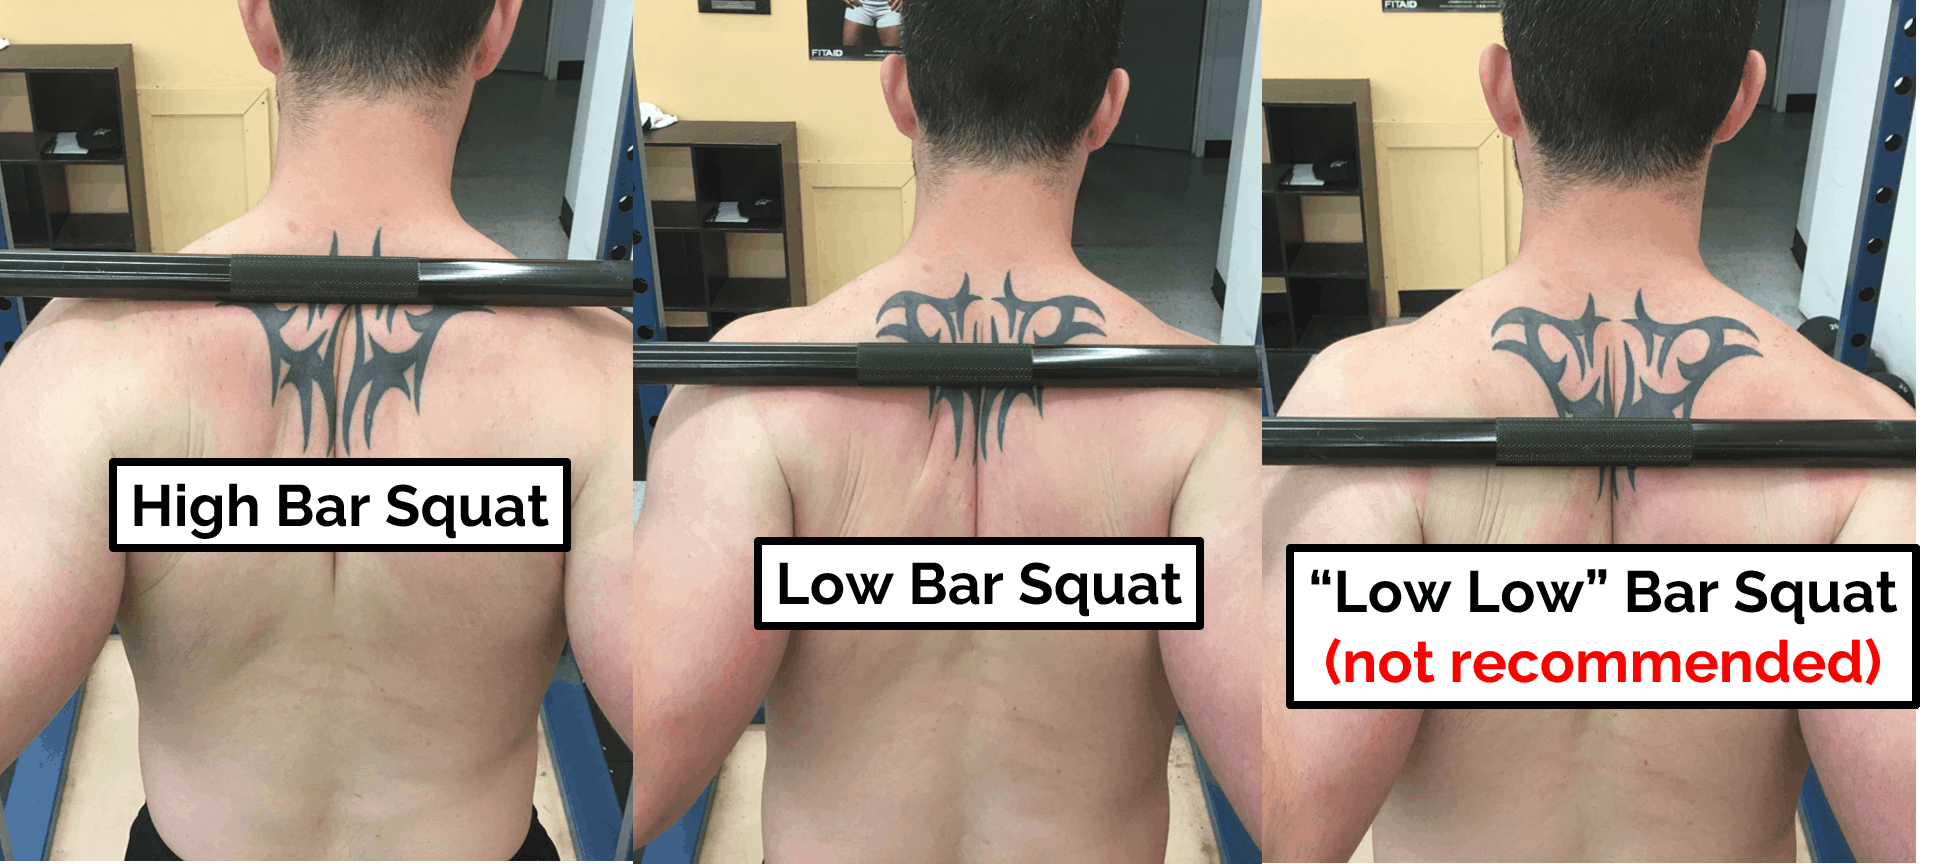 low low bar squat